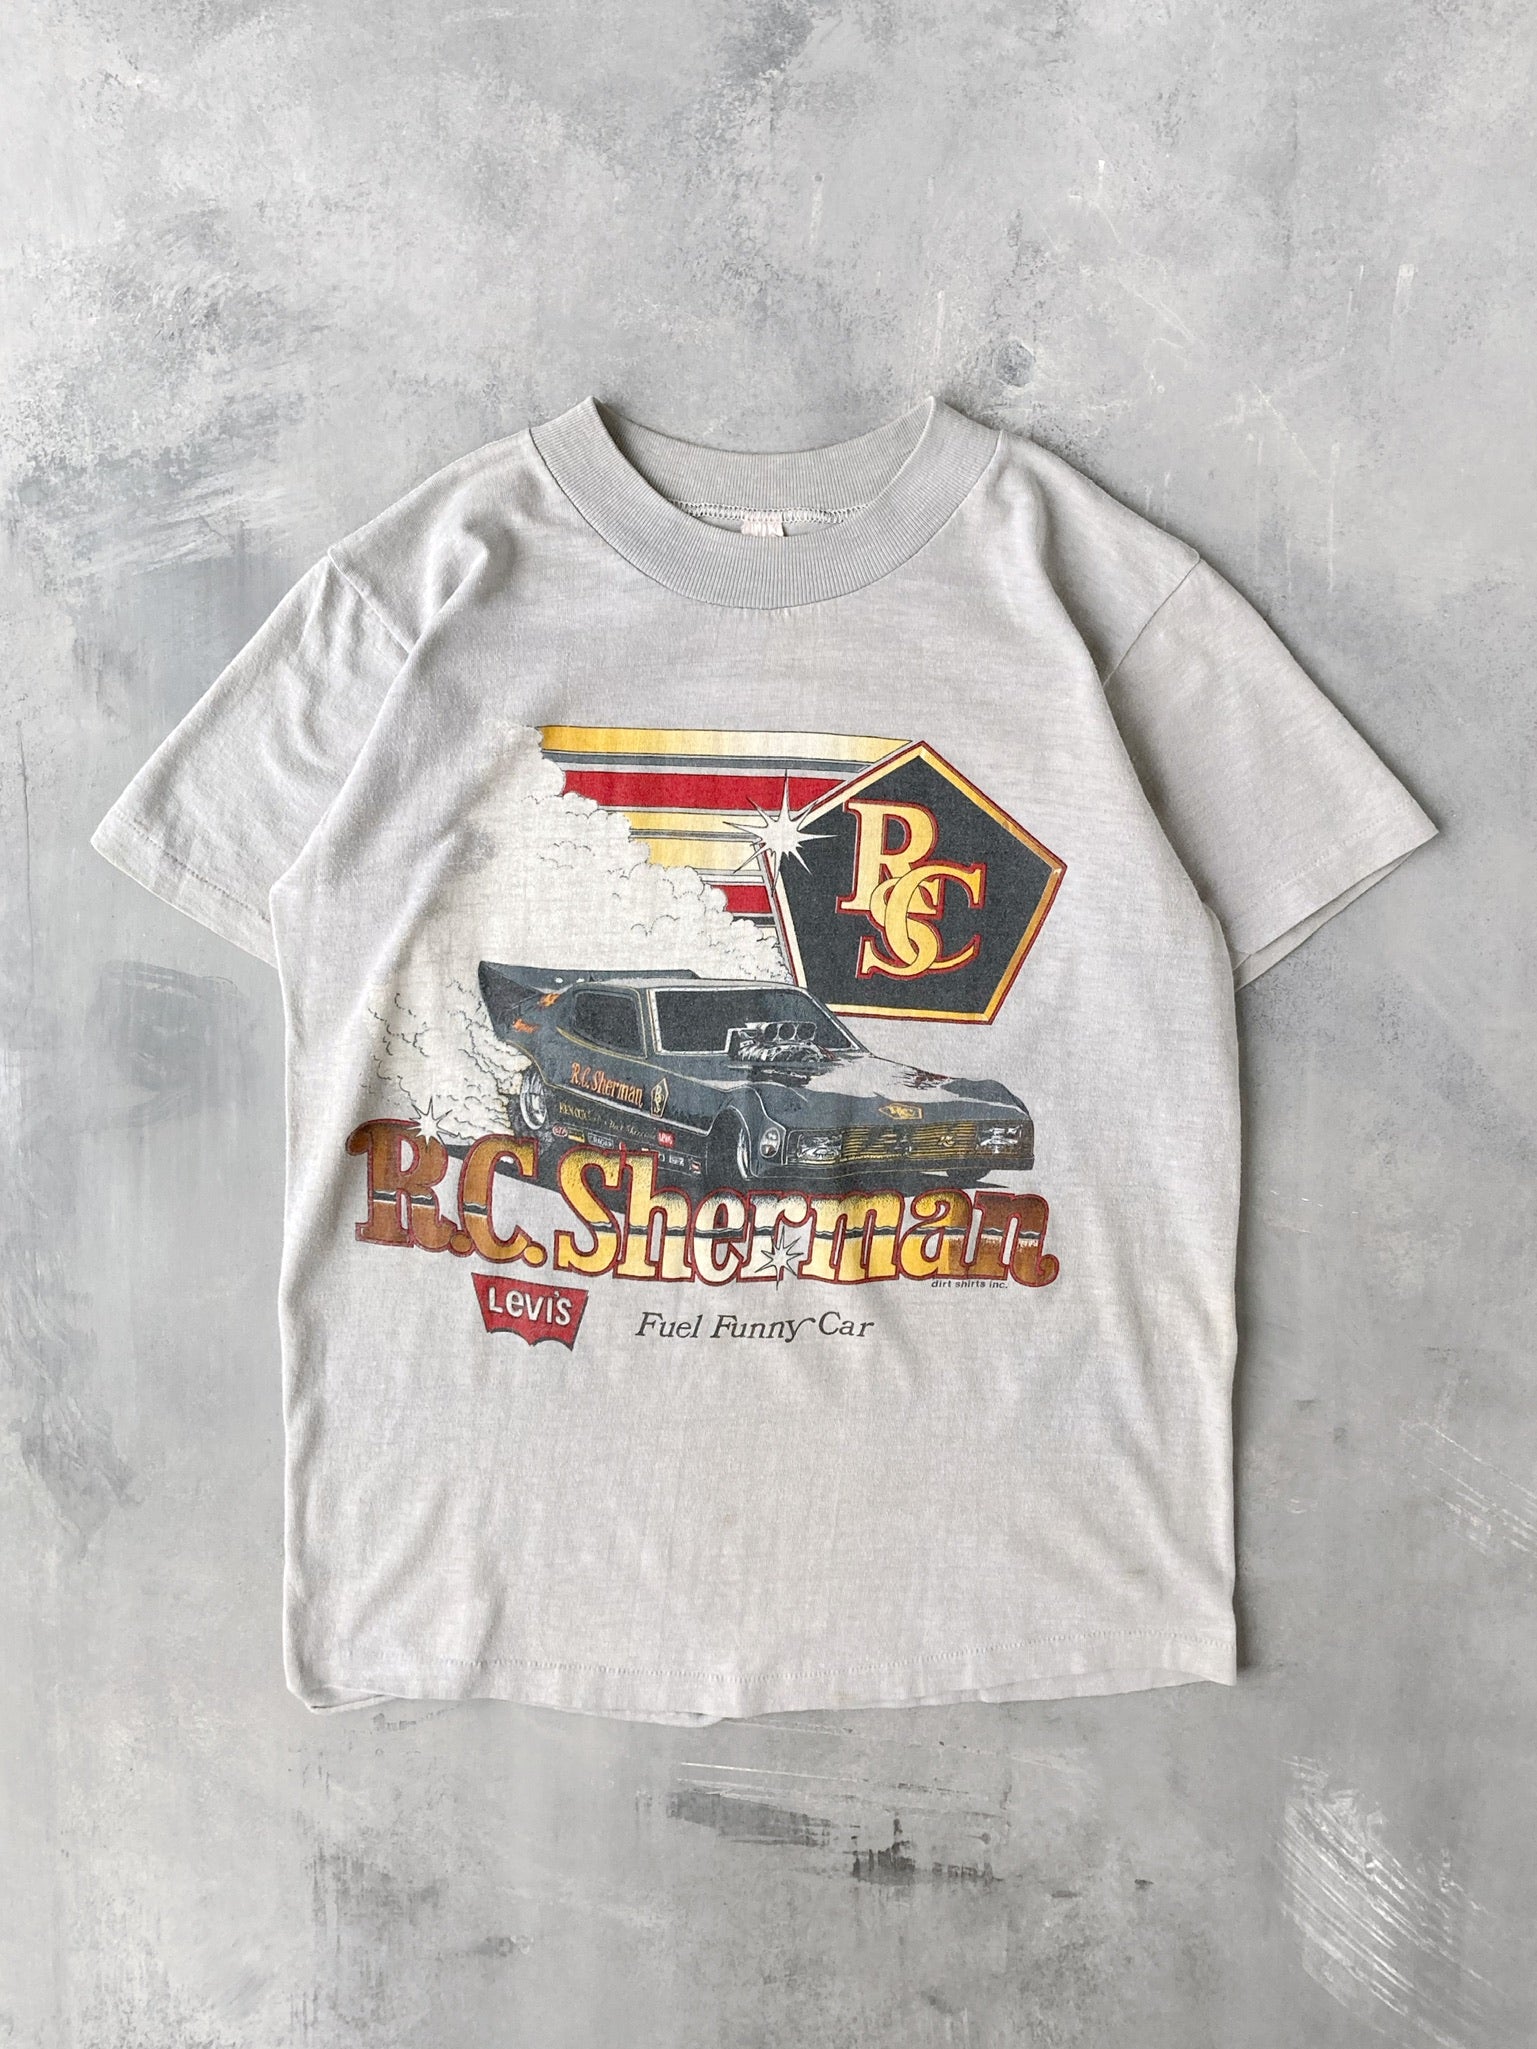 R.C. Sherman T-Shirt 70's / 80's - Small